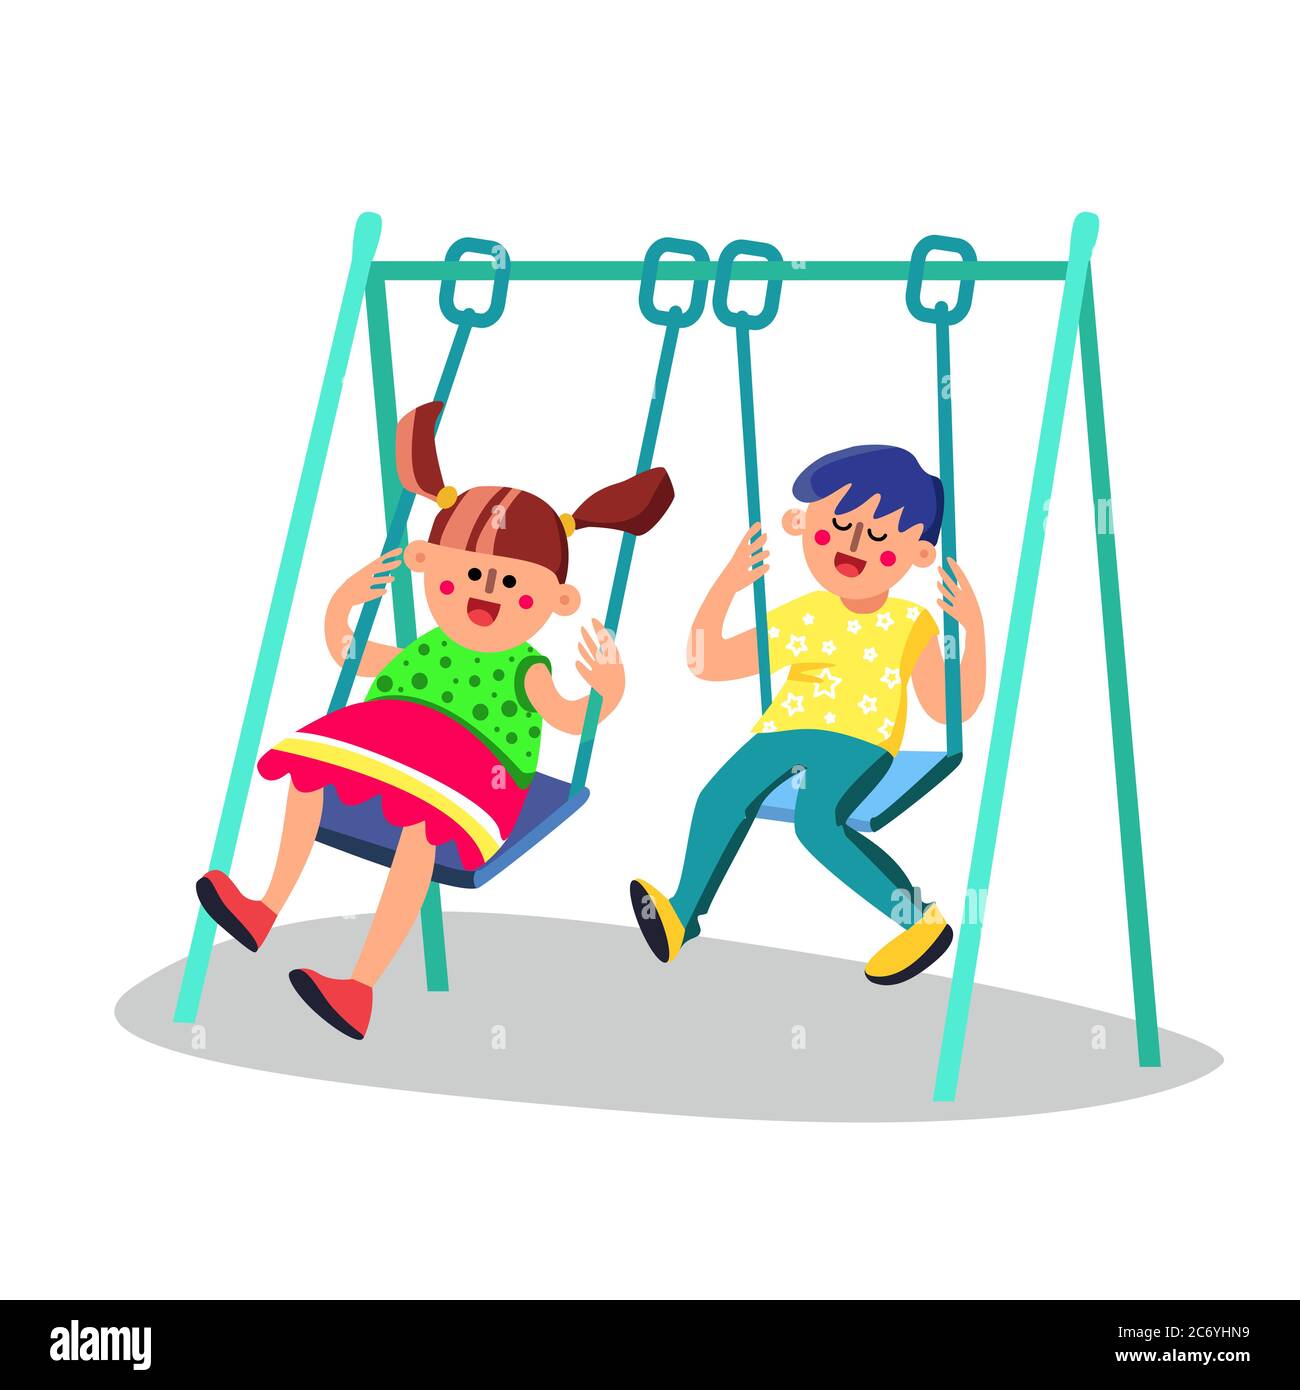 Cute Kids Having Fun On Swing In Playground Vector Stock Vector Image ...